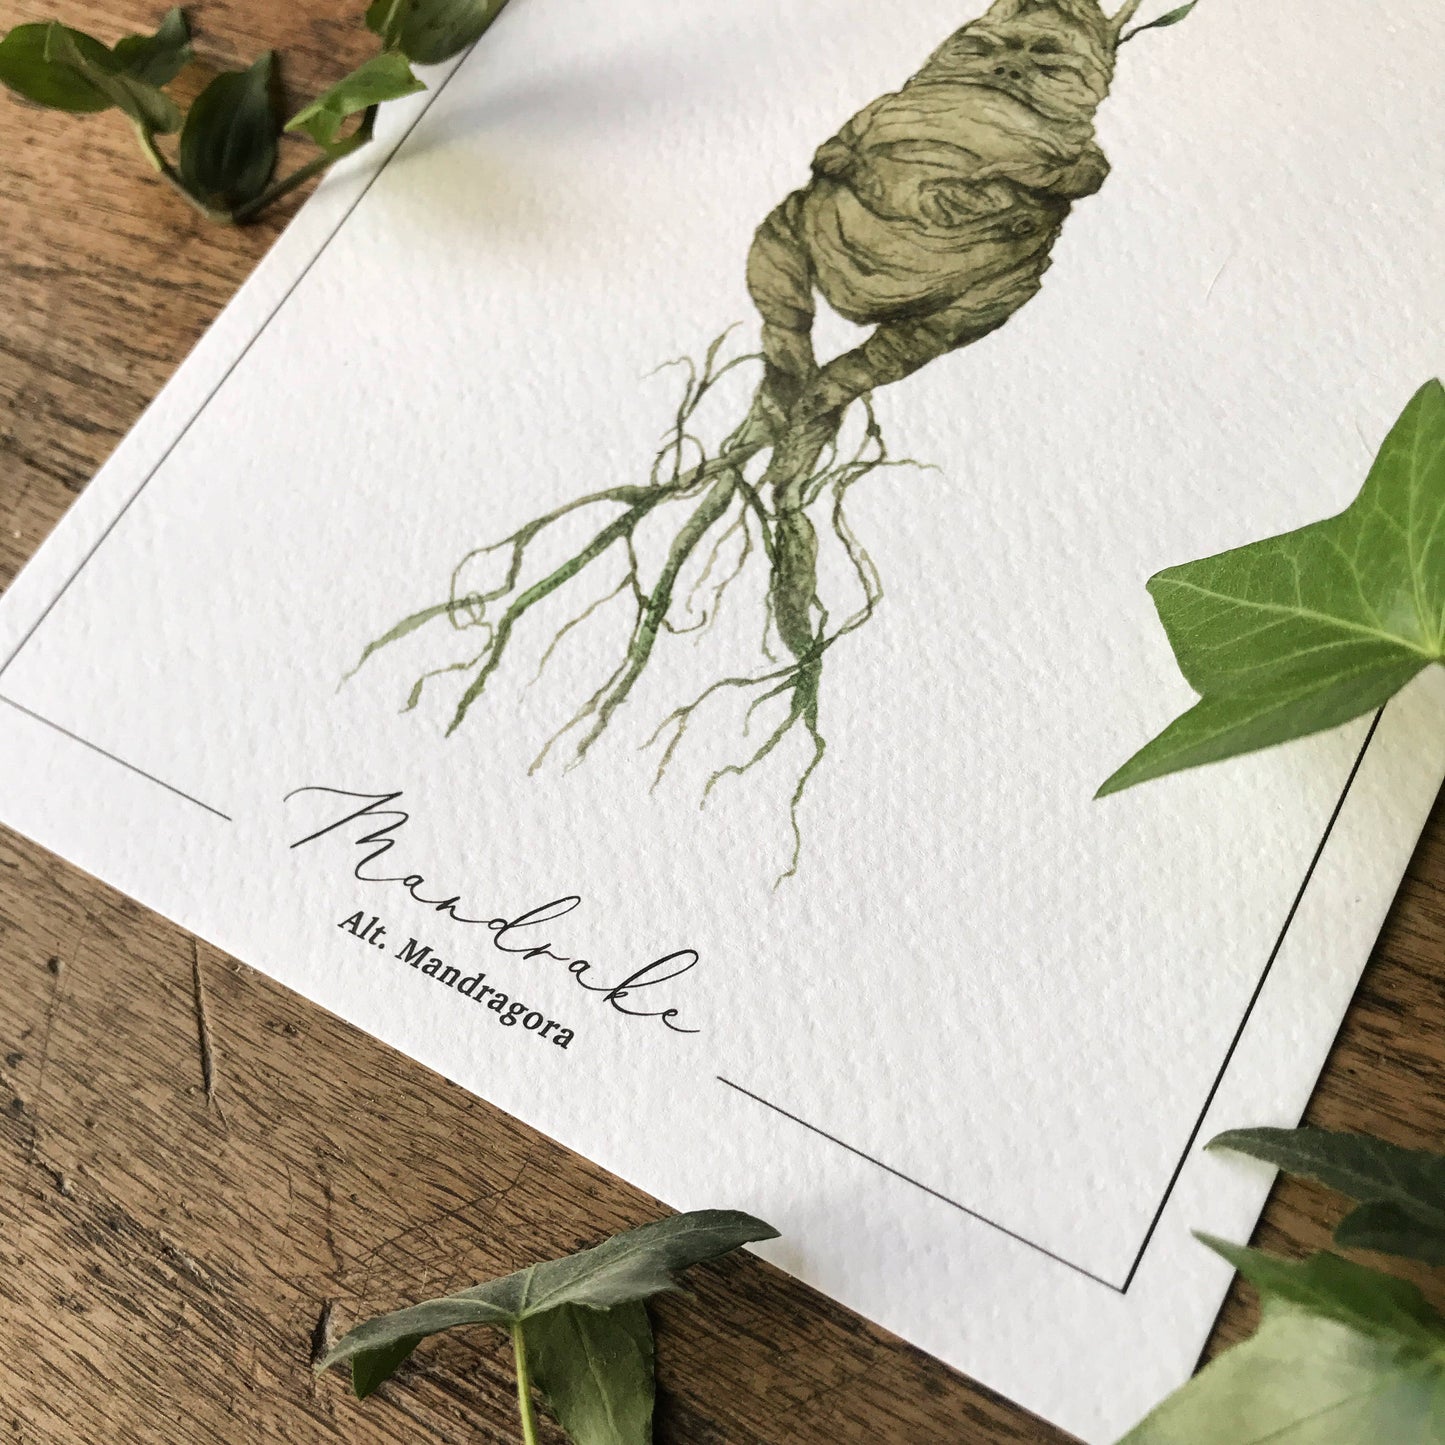 Mandrake Magical Watercolour Herbology Art Print